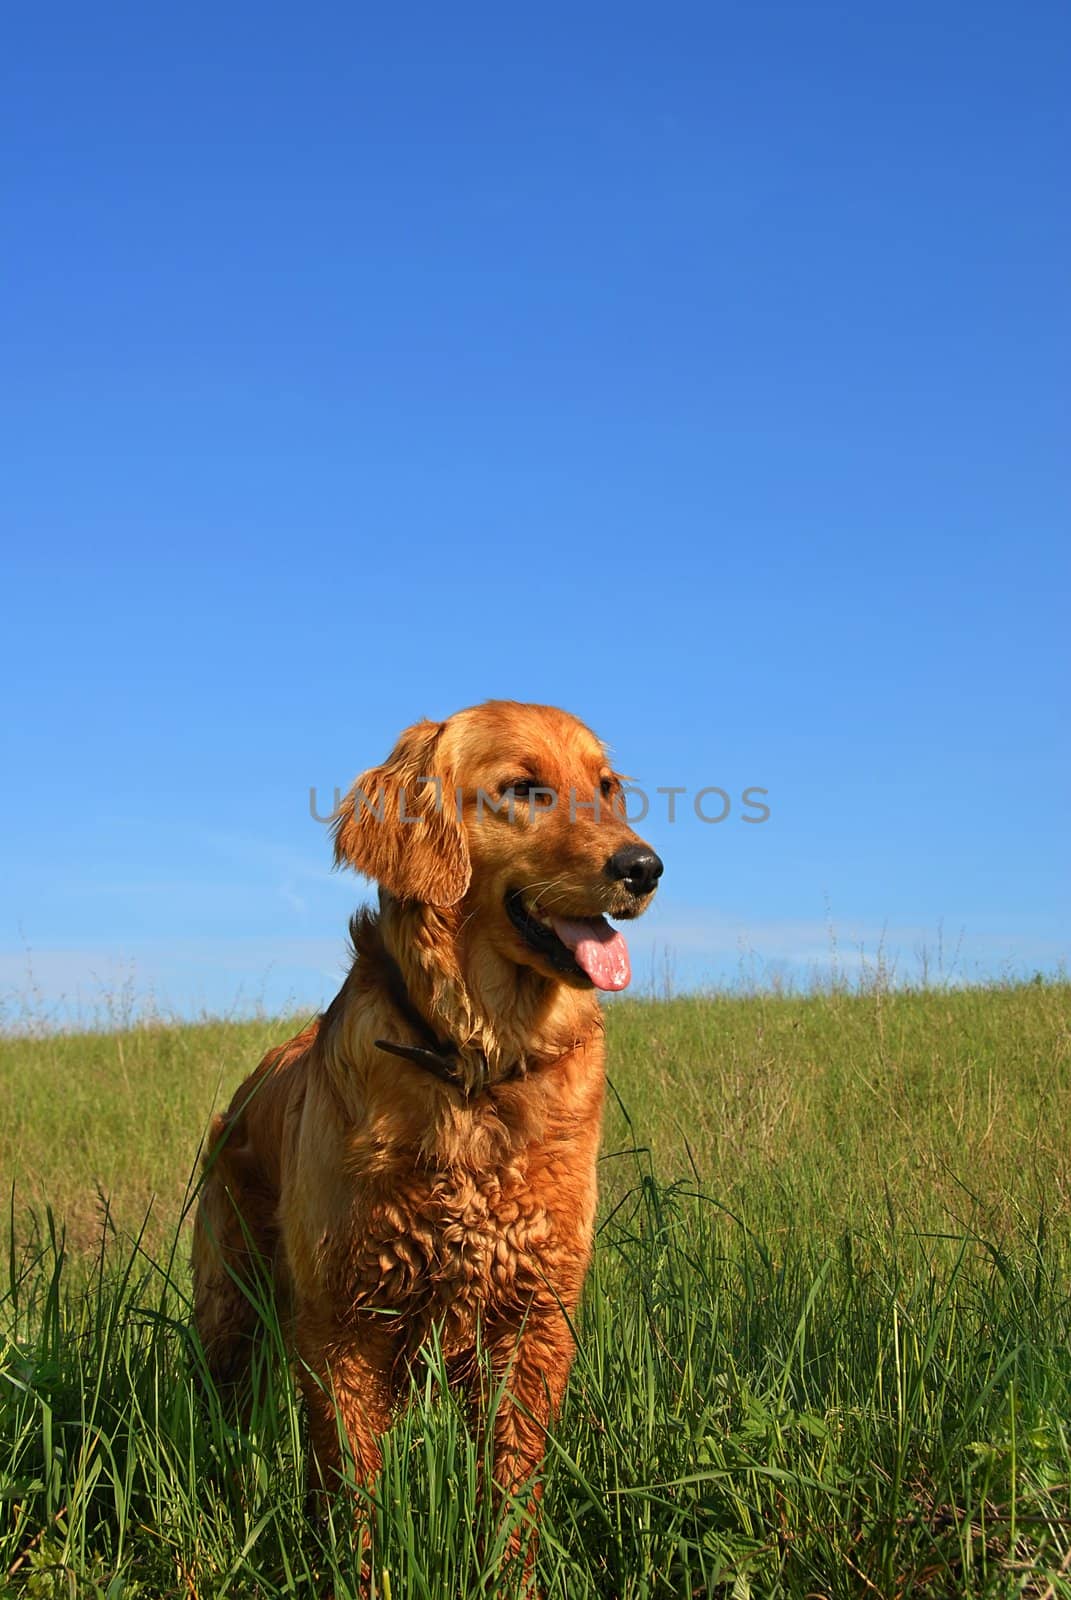 orange golden retriever dog portrait outdoors on green meadow over blue sky